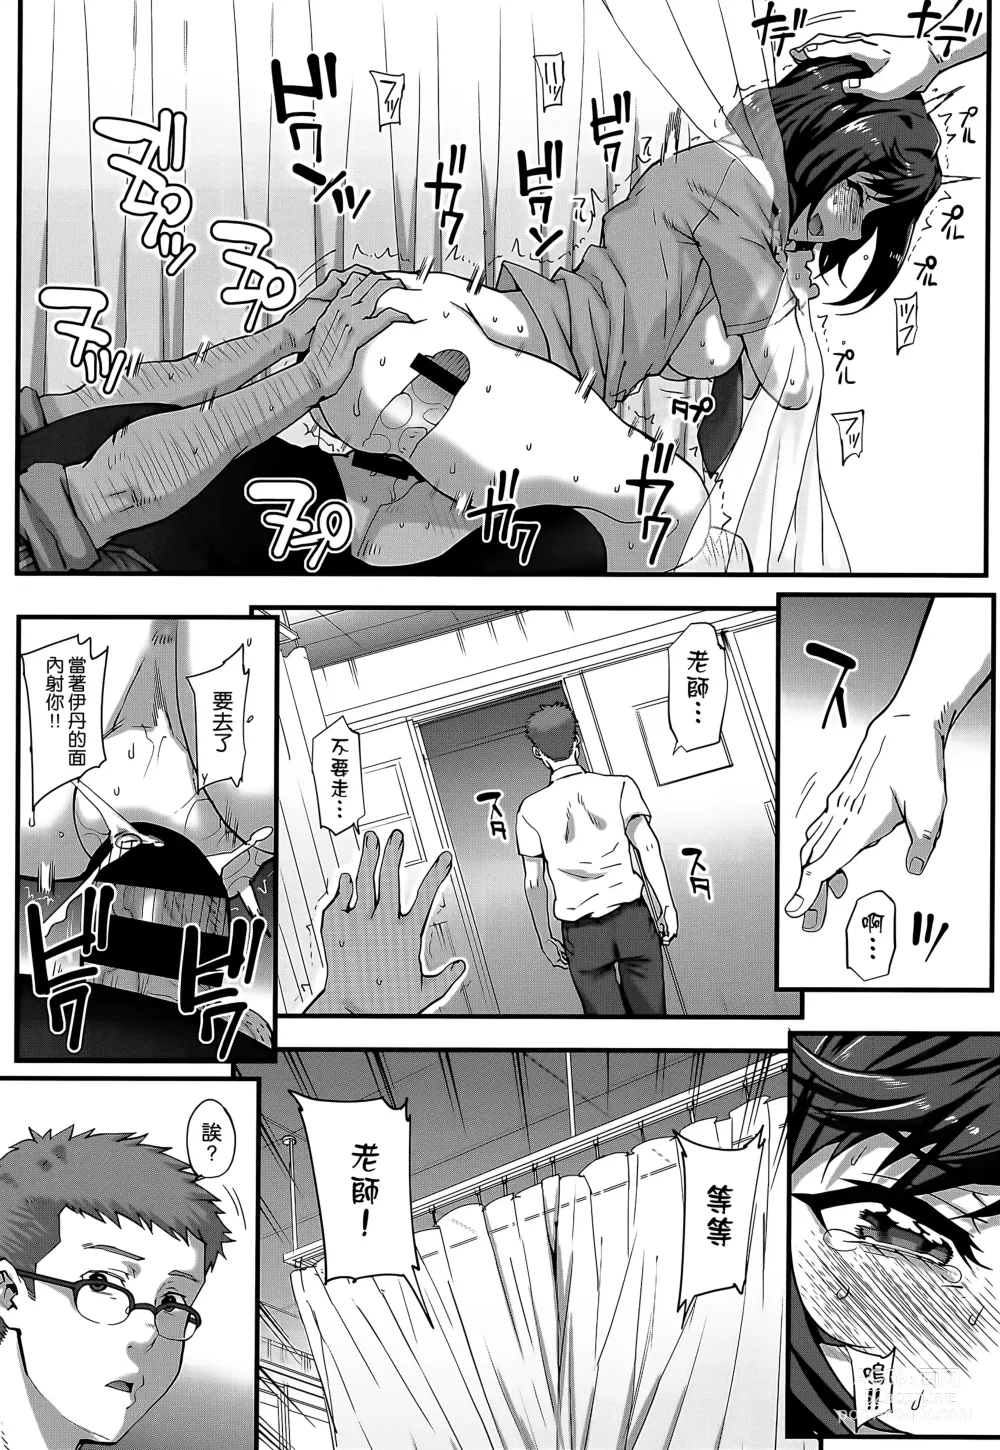 Page 192 of manga Aoharu Snatch - Santch a youth time